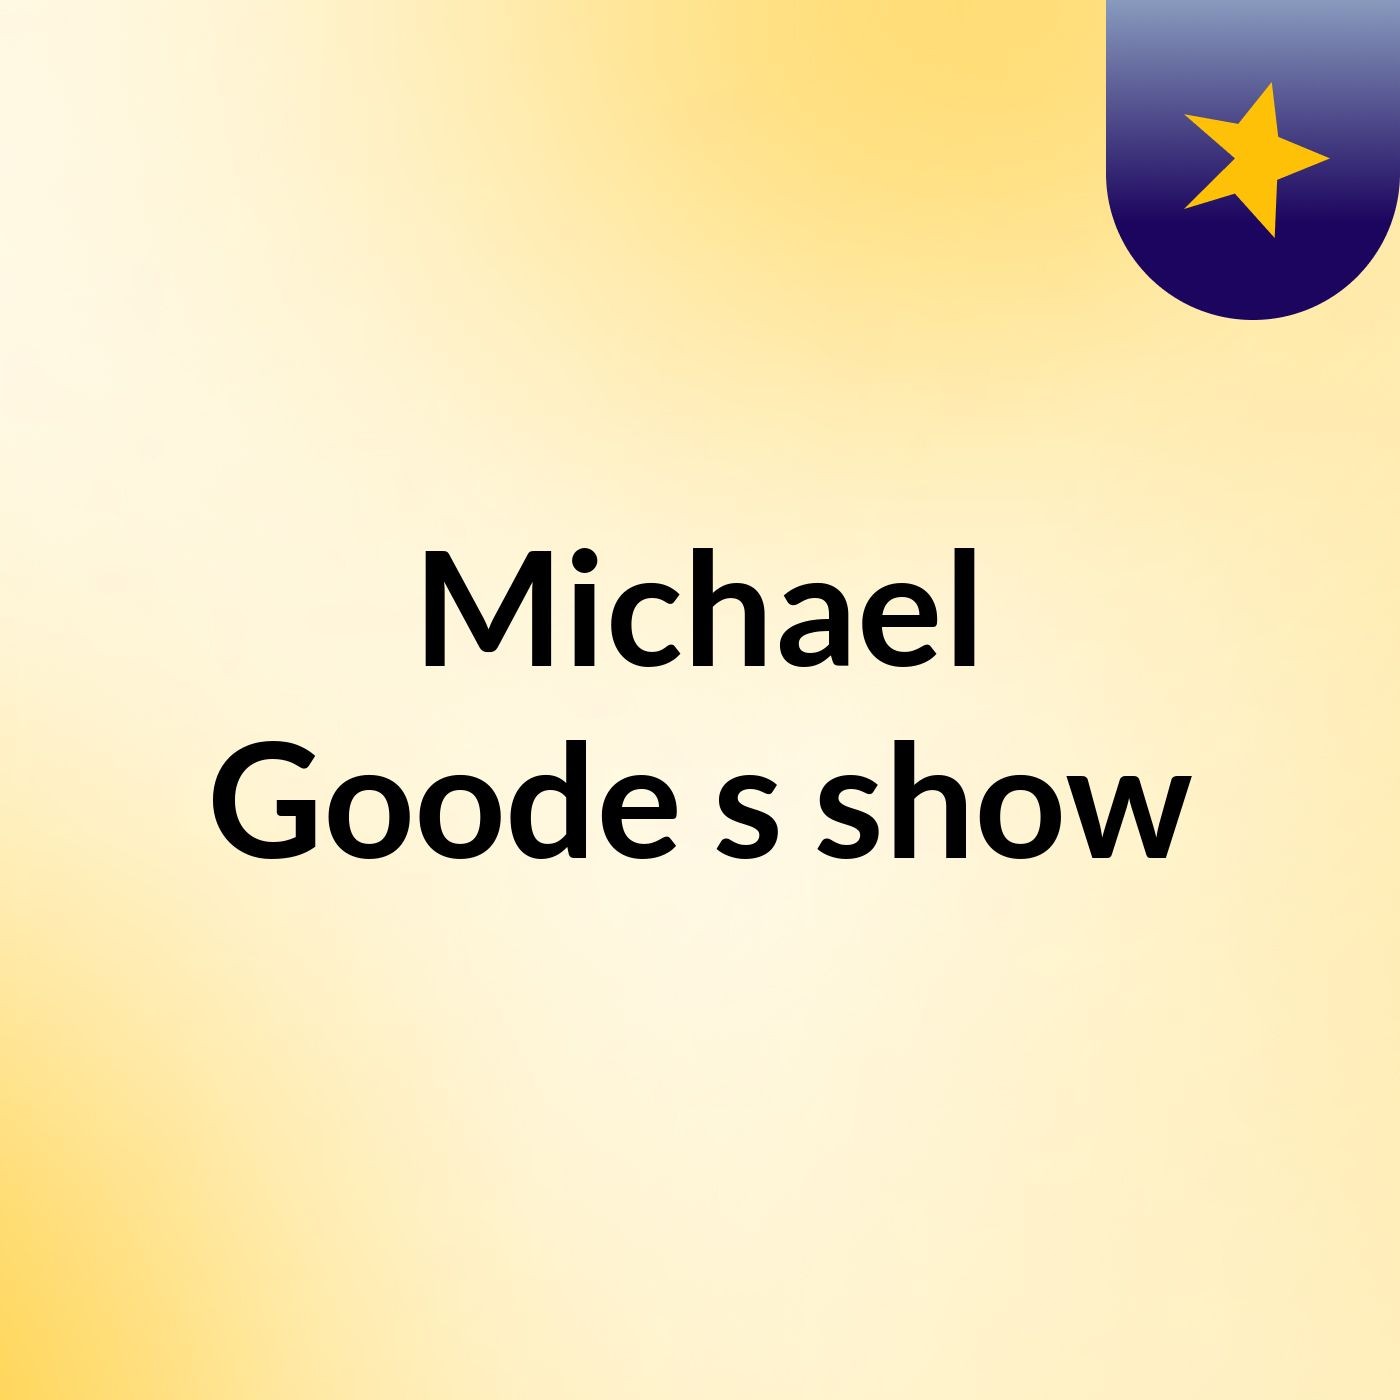 Episode 11 - Michael Goode's show